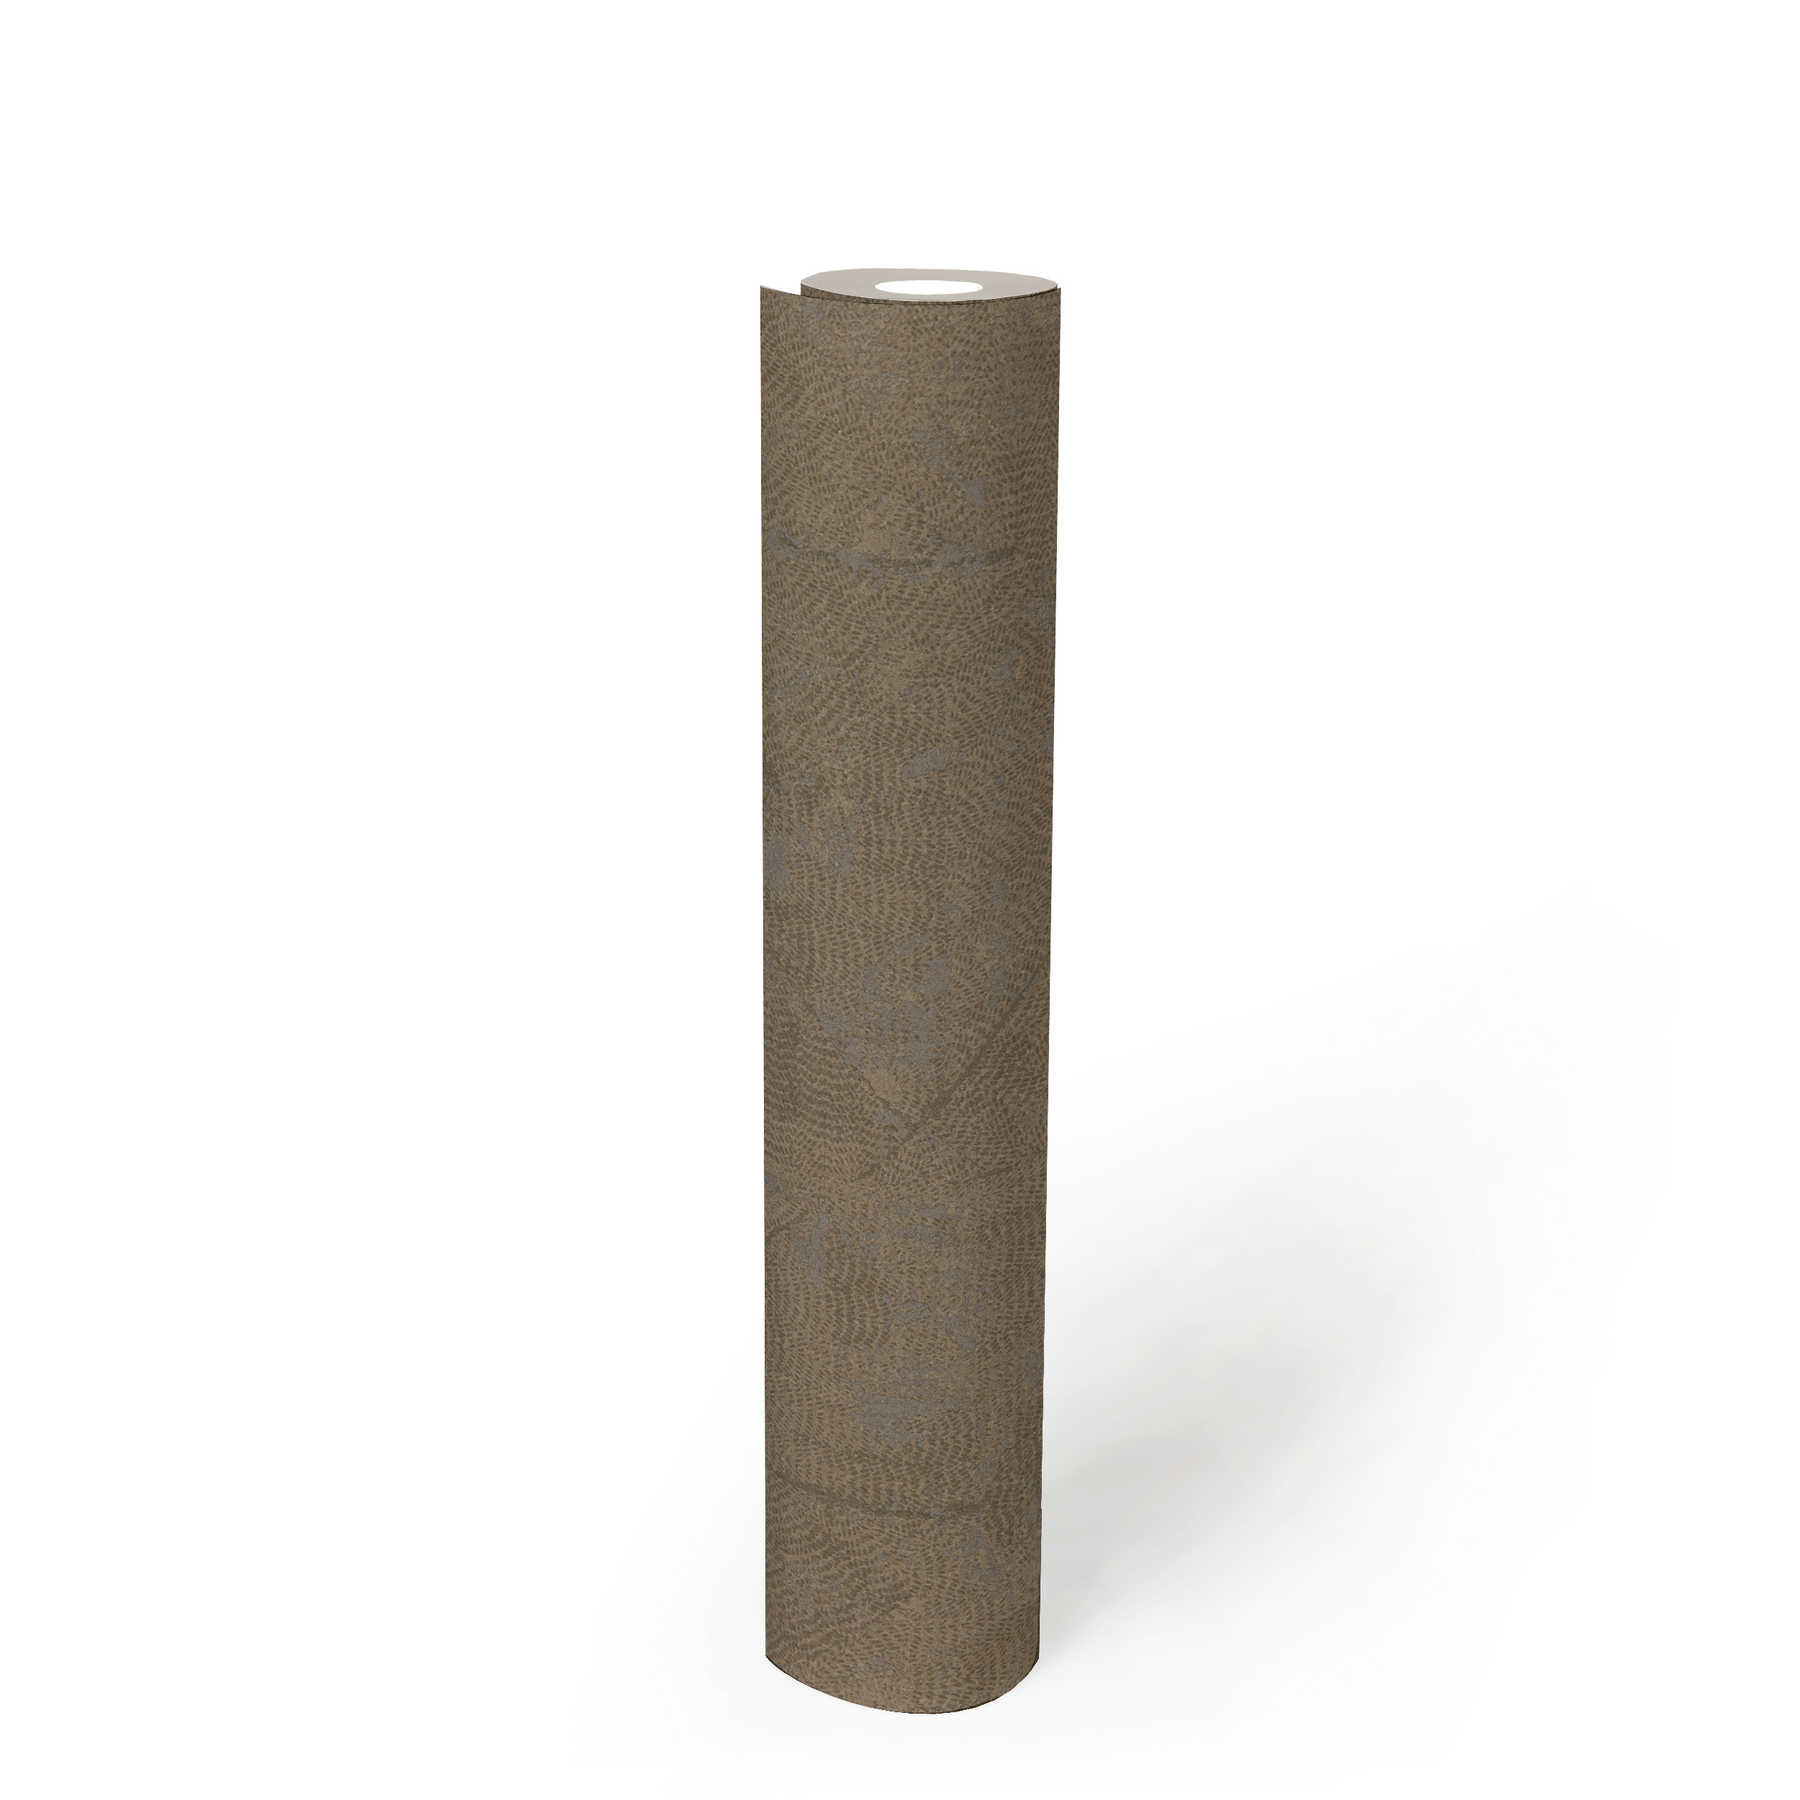             Tapete mediterraner Stil, gemustert – Braun, Bronze, Grau
        